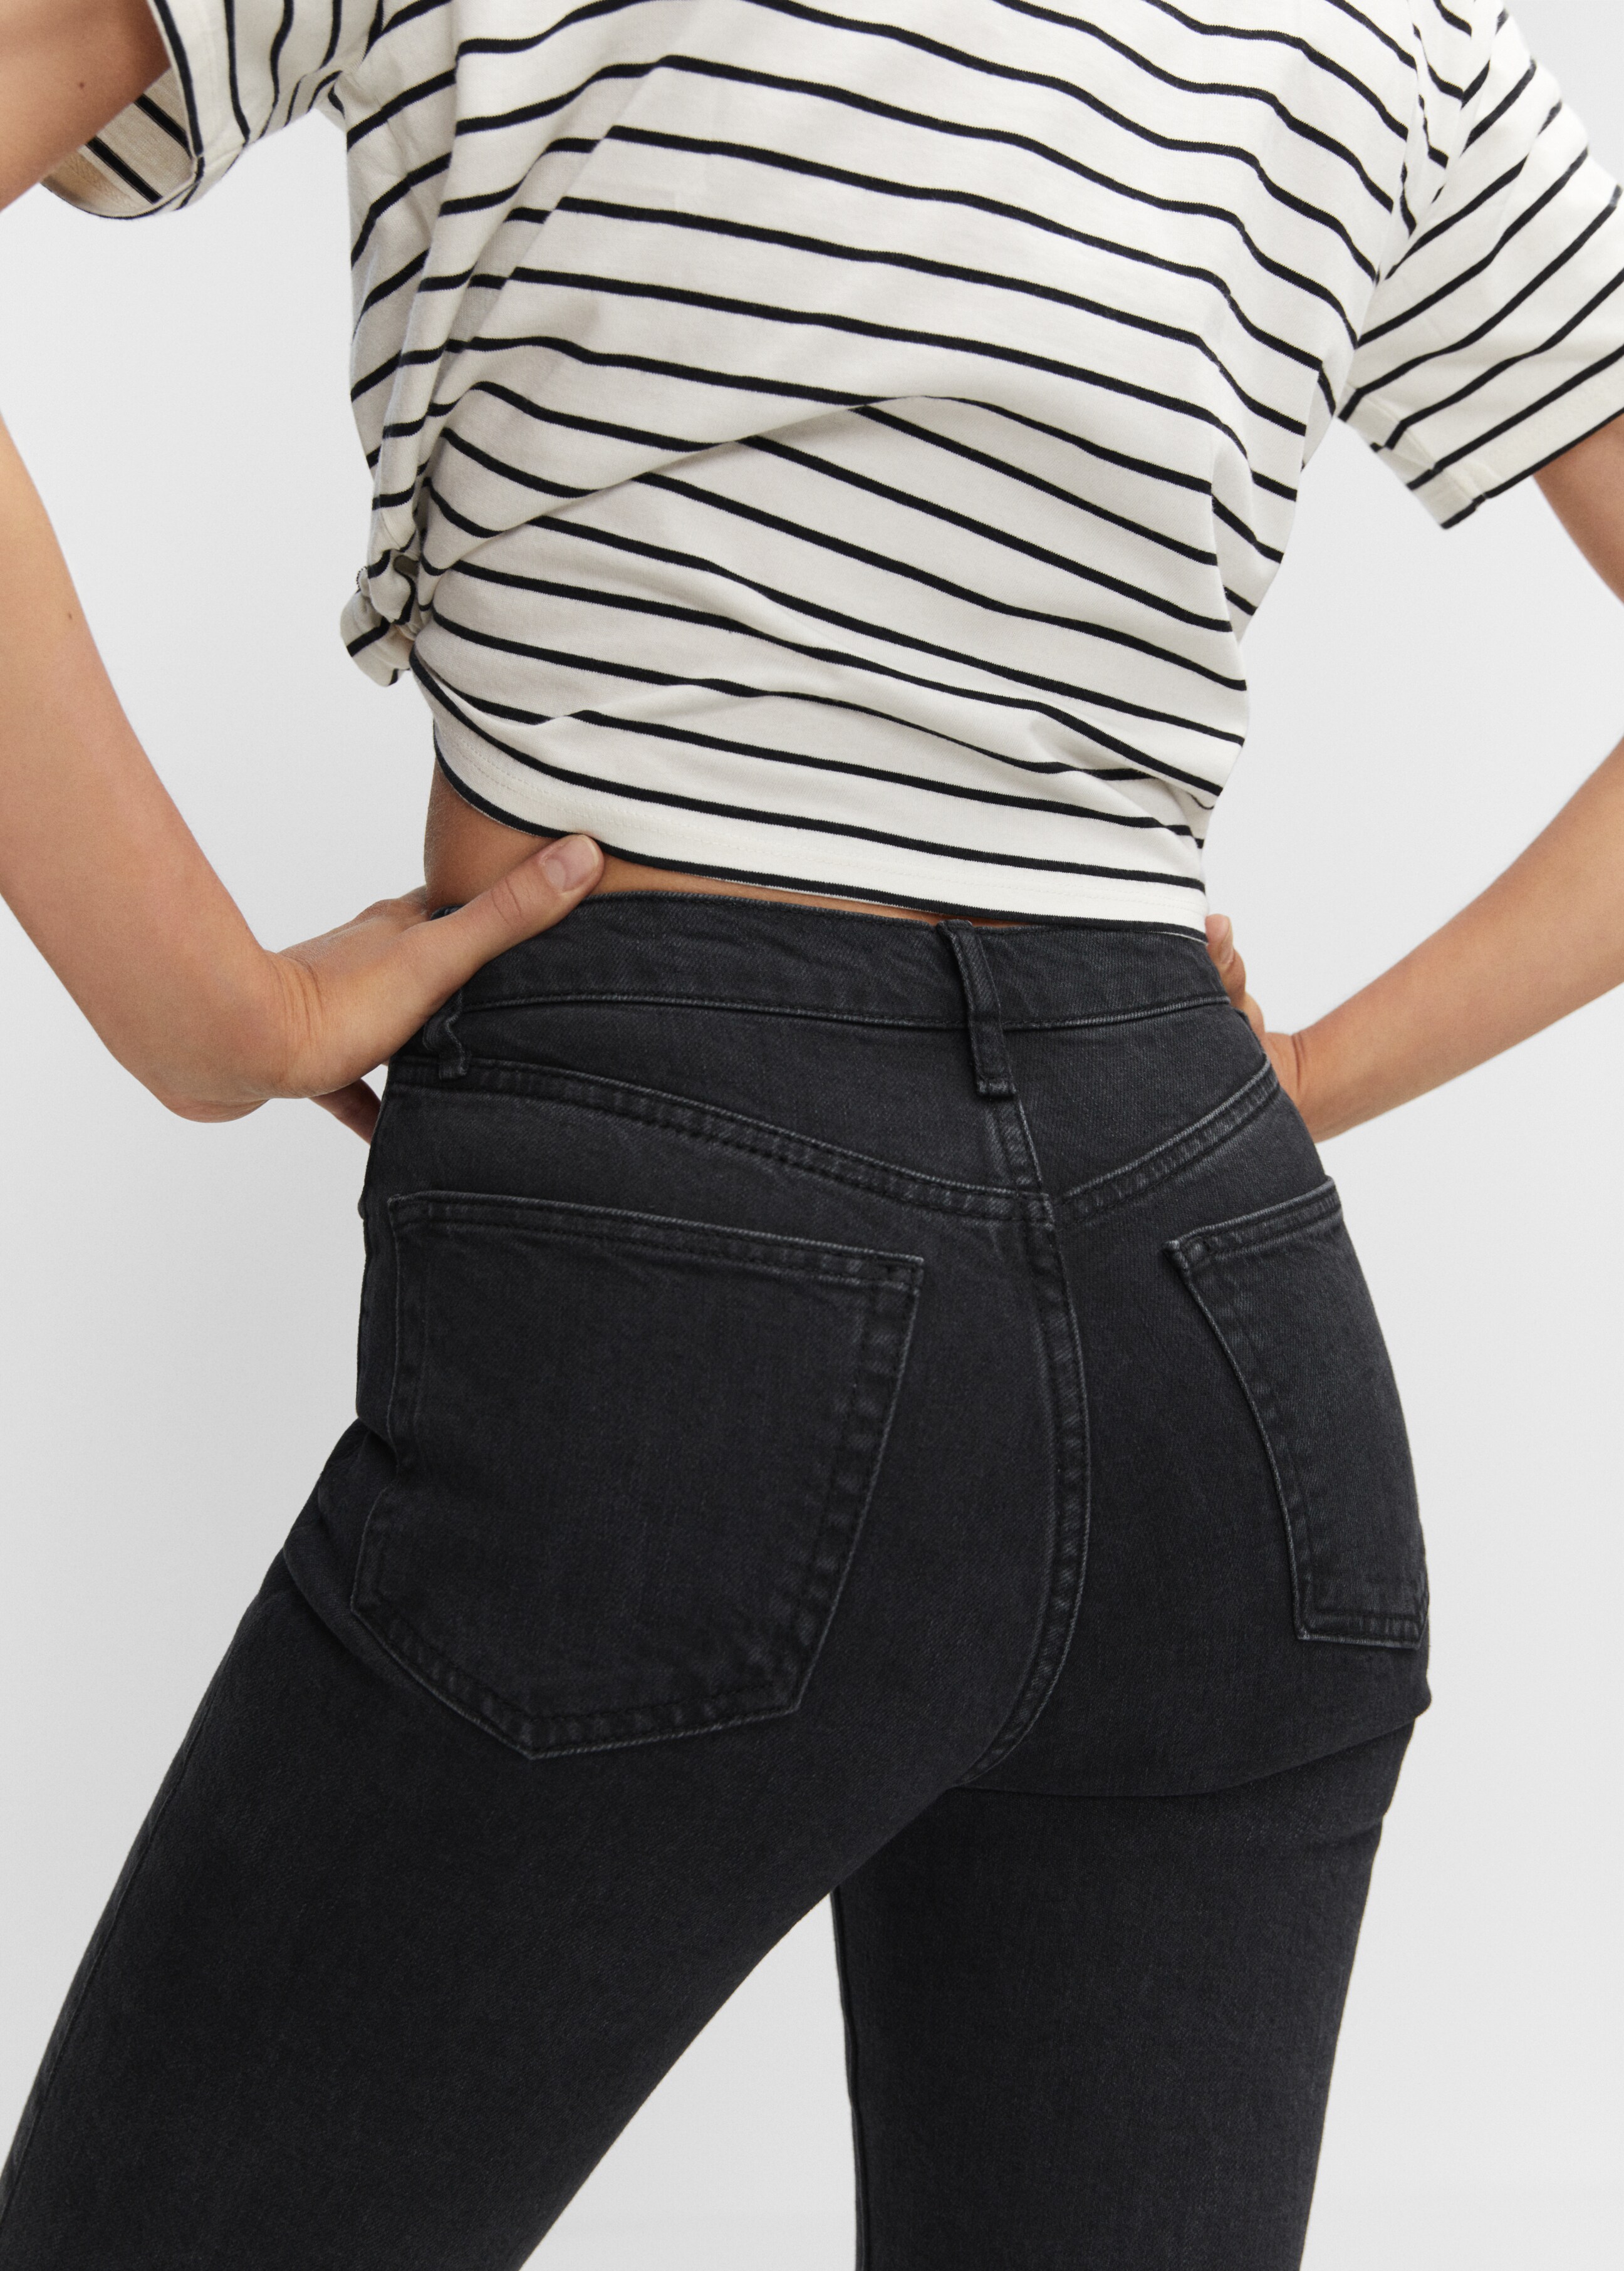 Slim cropped jeans - Detalji artikla 2